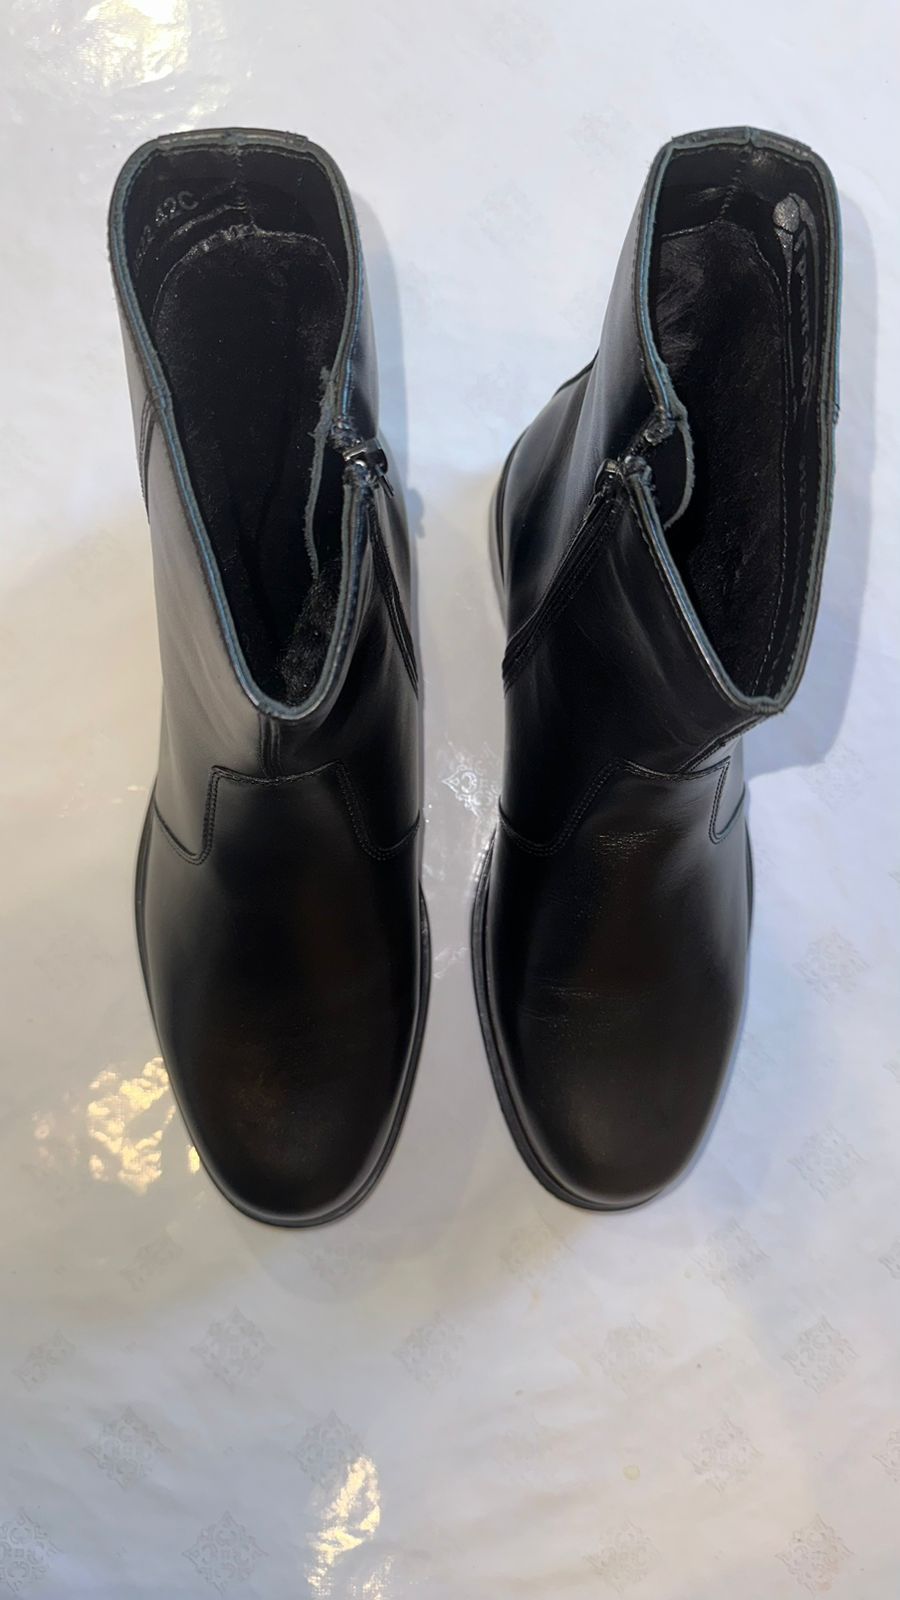 Зимние мужские сапоги ботинки полуботинки обувь